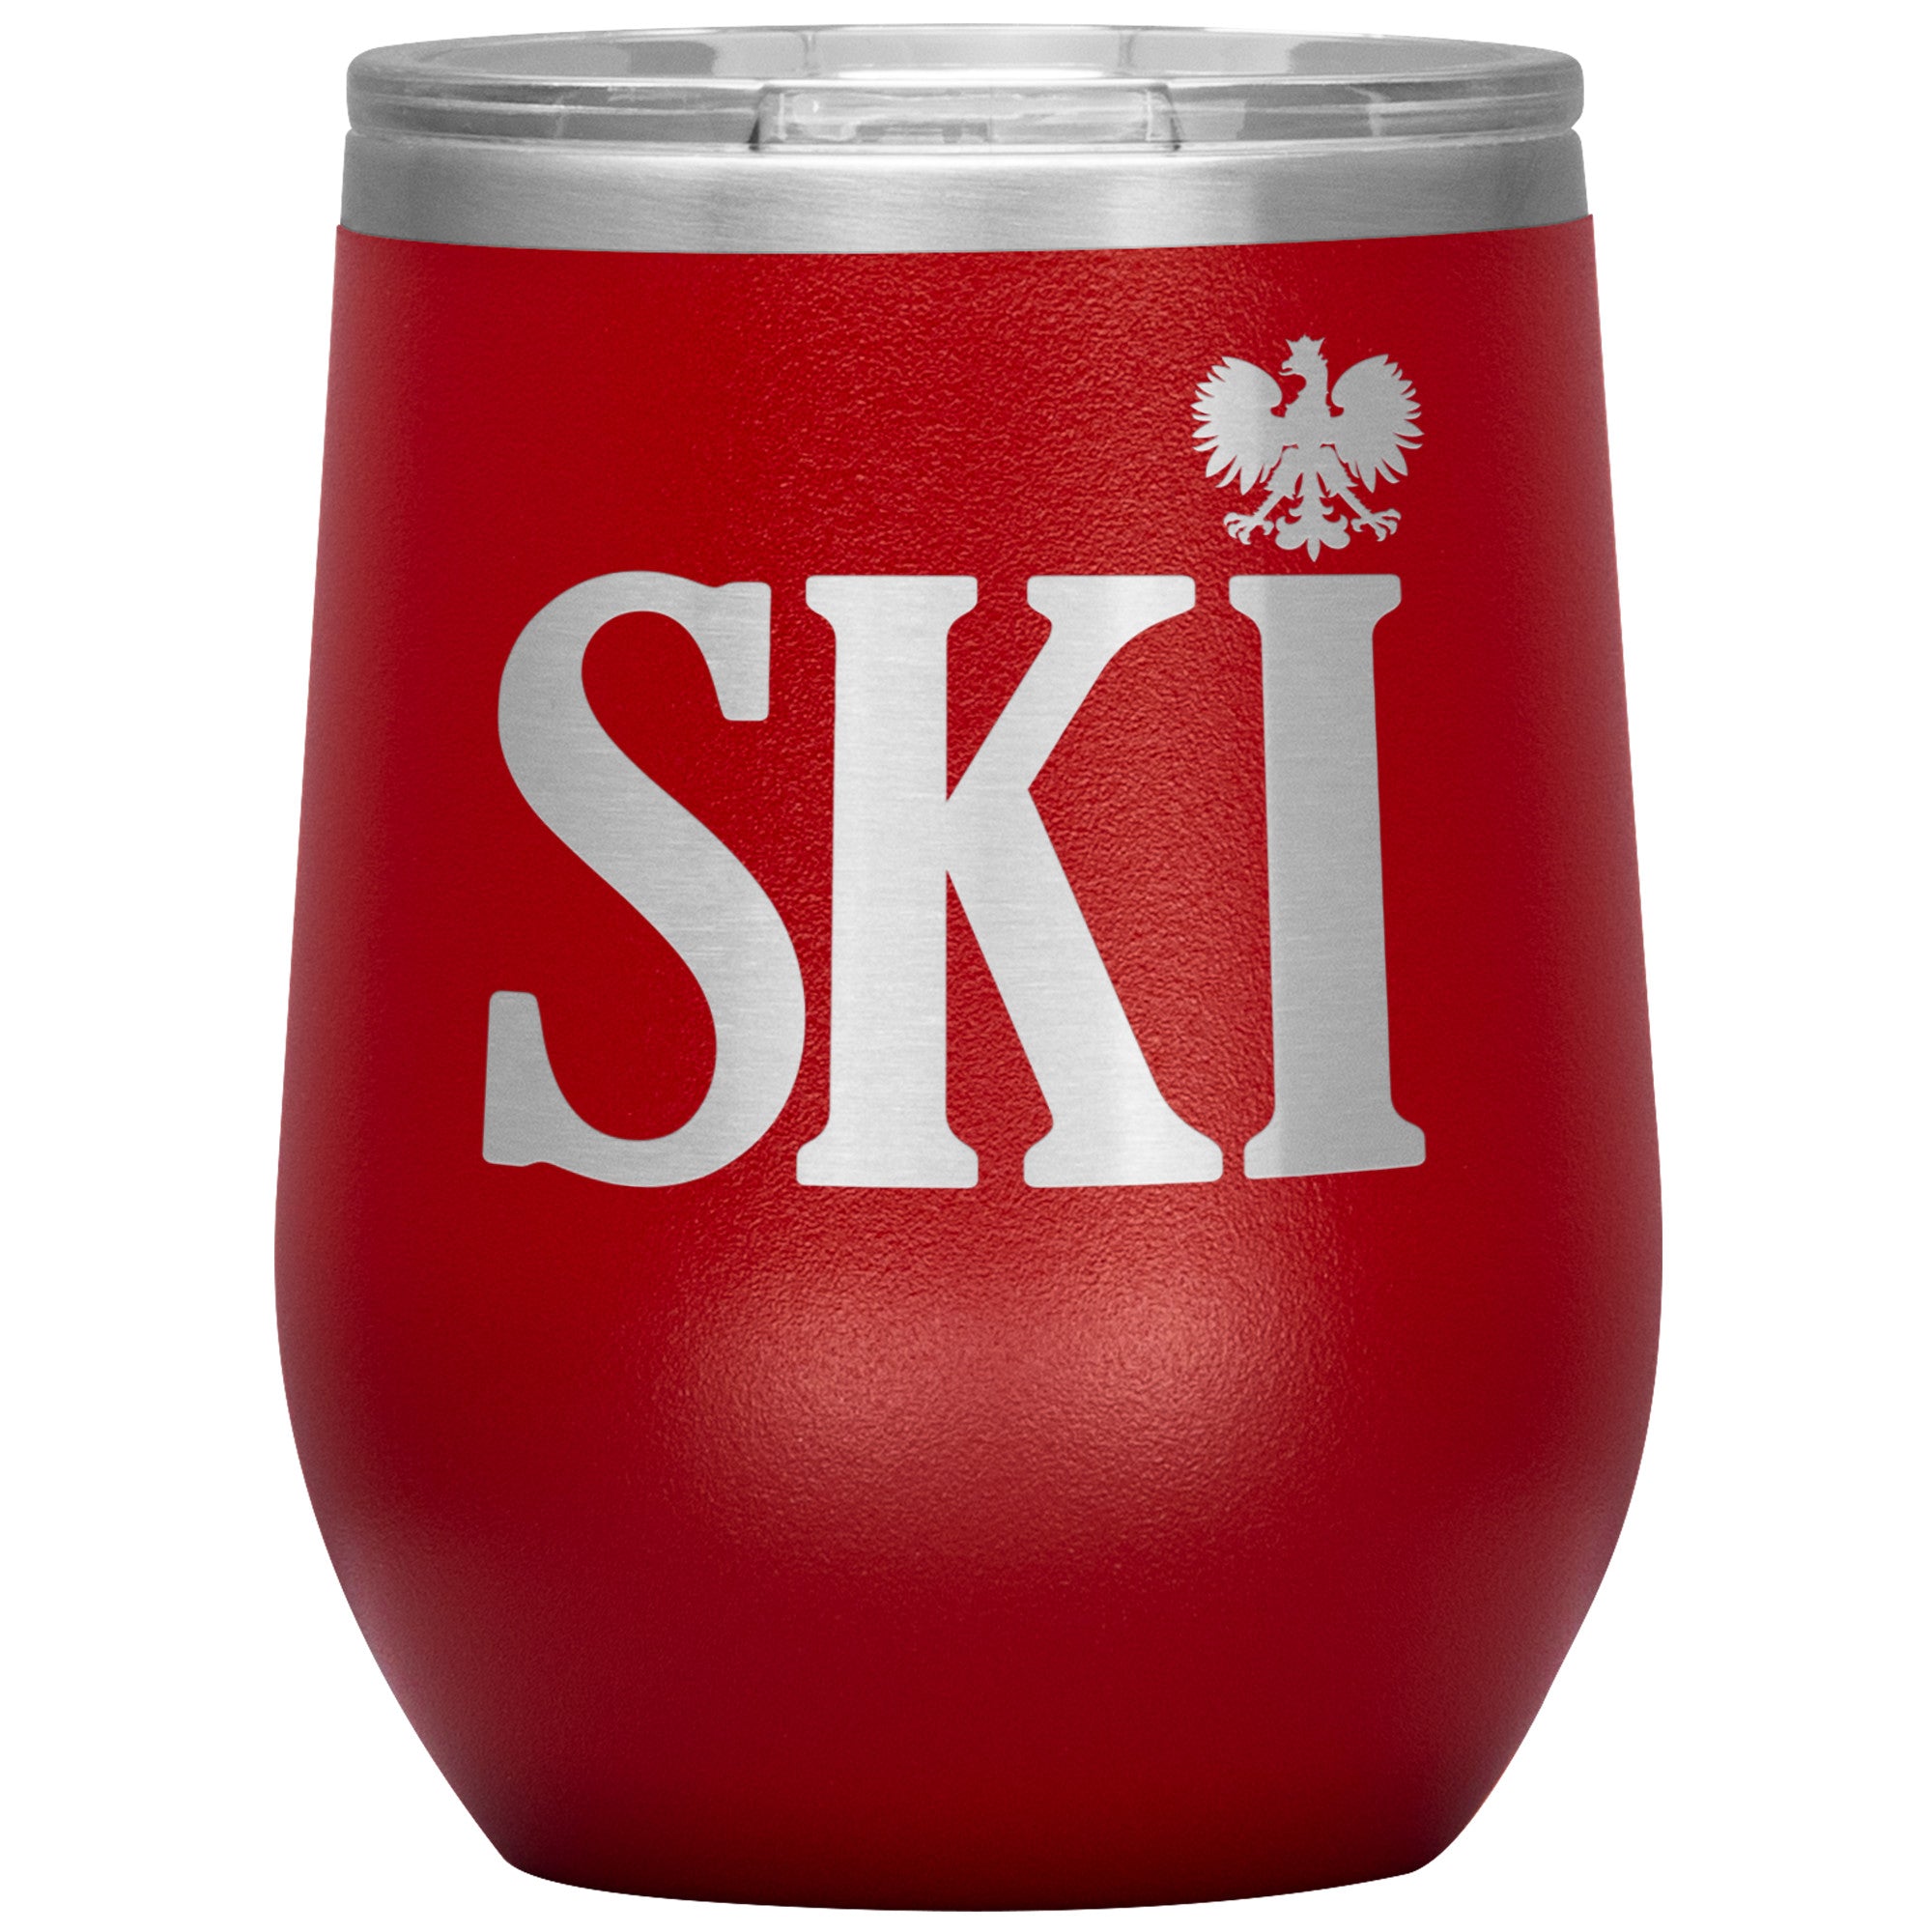 Polish Surnames Ending In SKI Insulated Wine Tumbler Tumblers teelaunch Red  